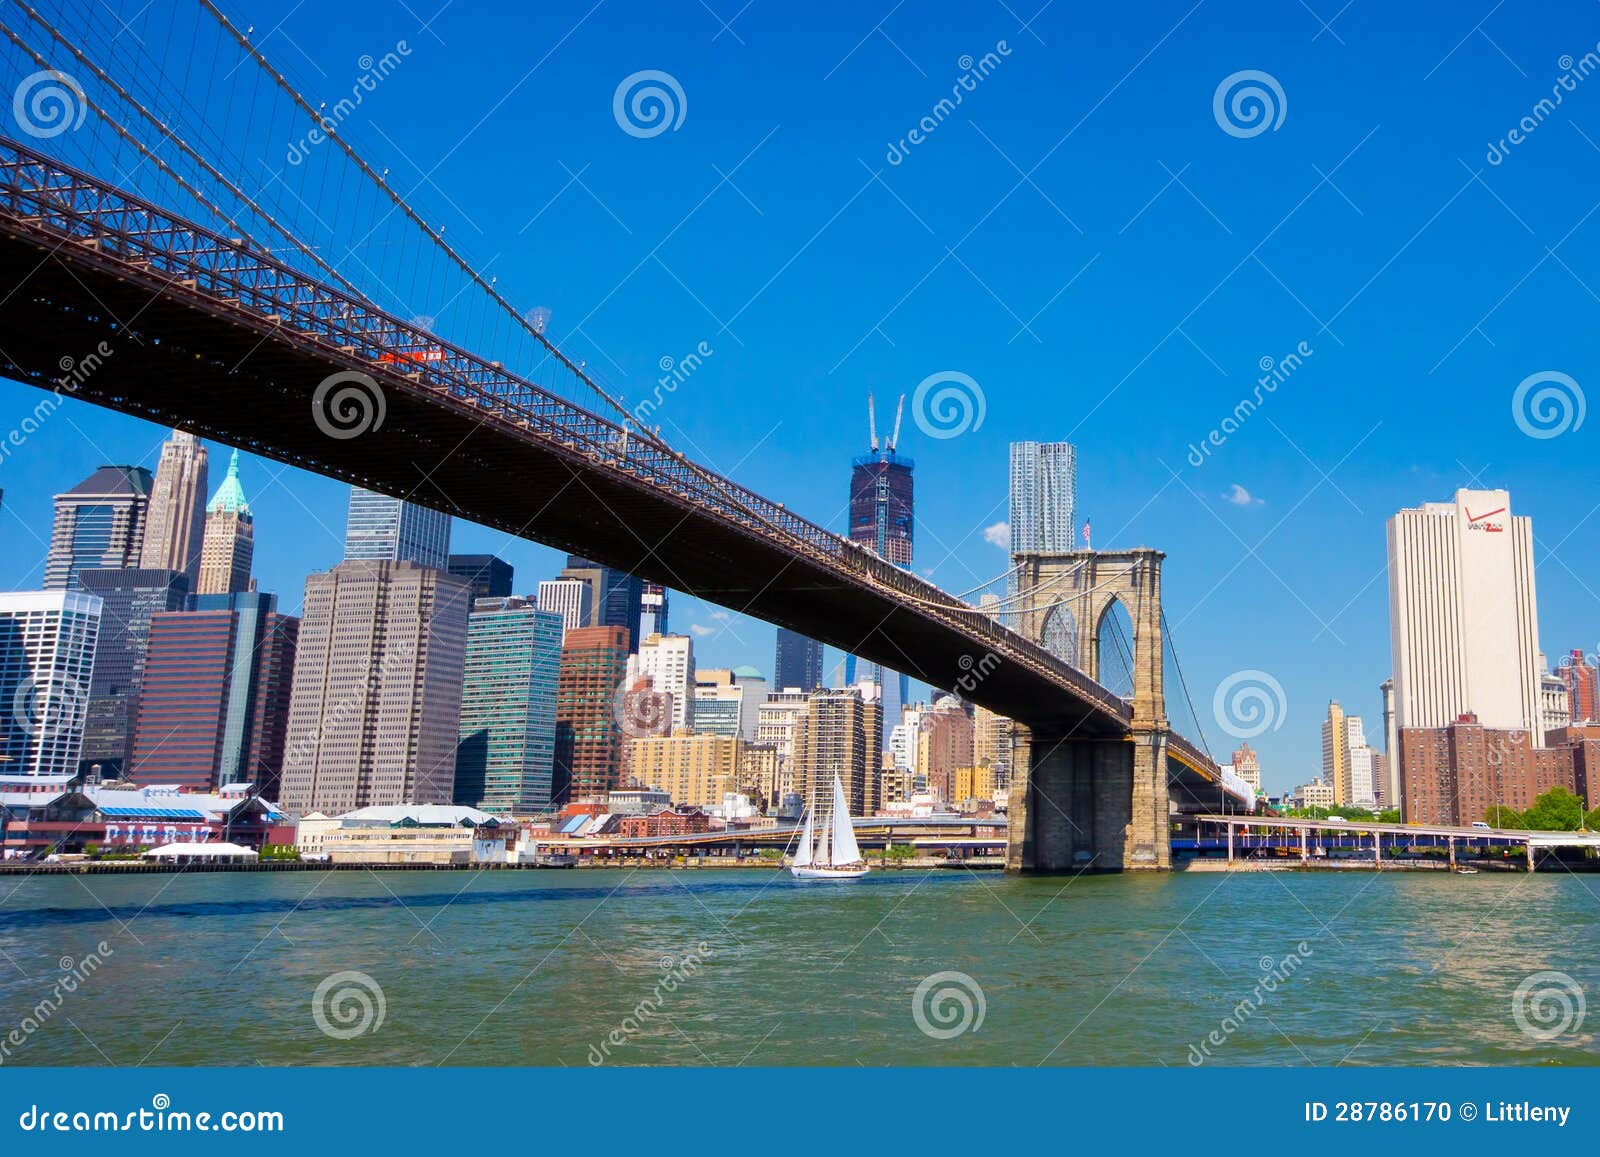 New York Brooklyn Suspension Bridge River Boat Sailboat City Stereoview E332